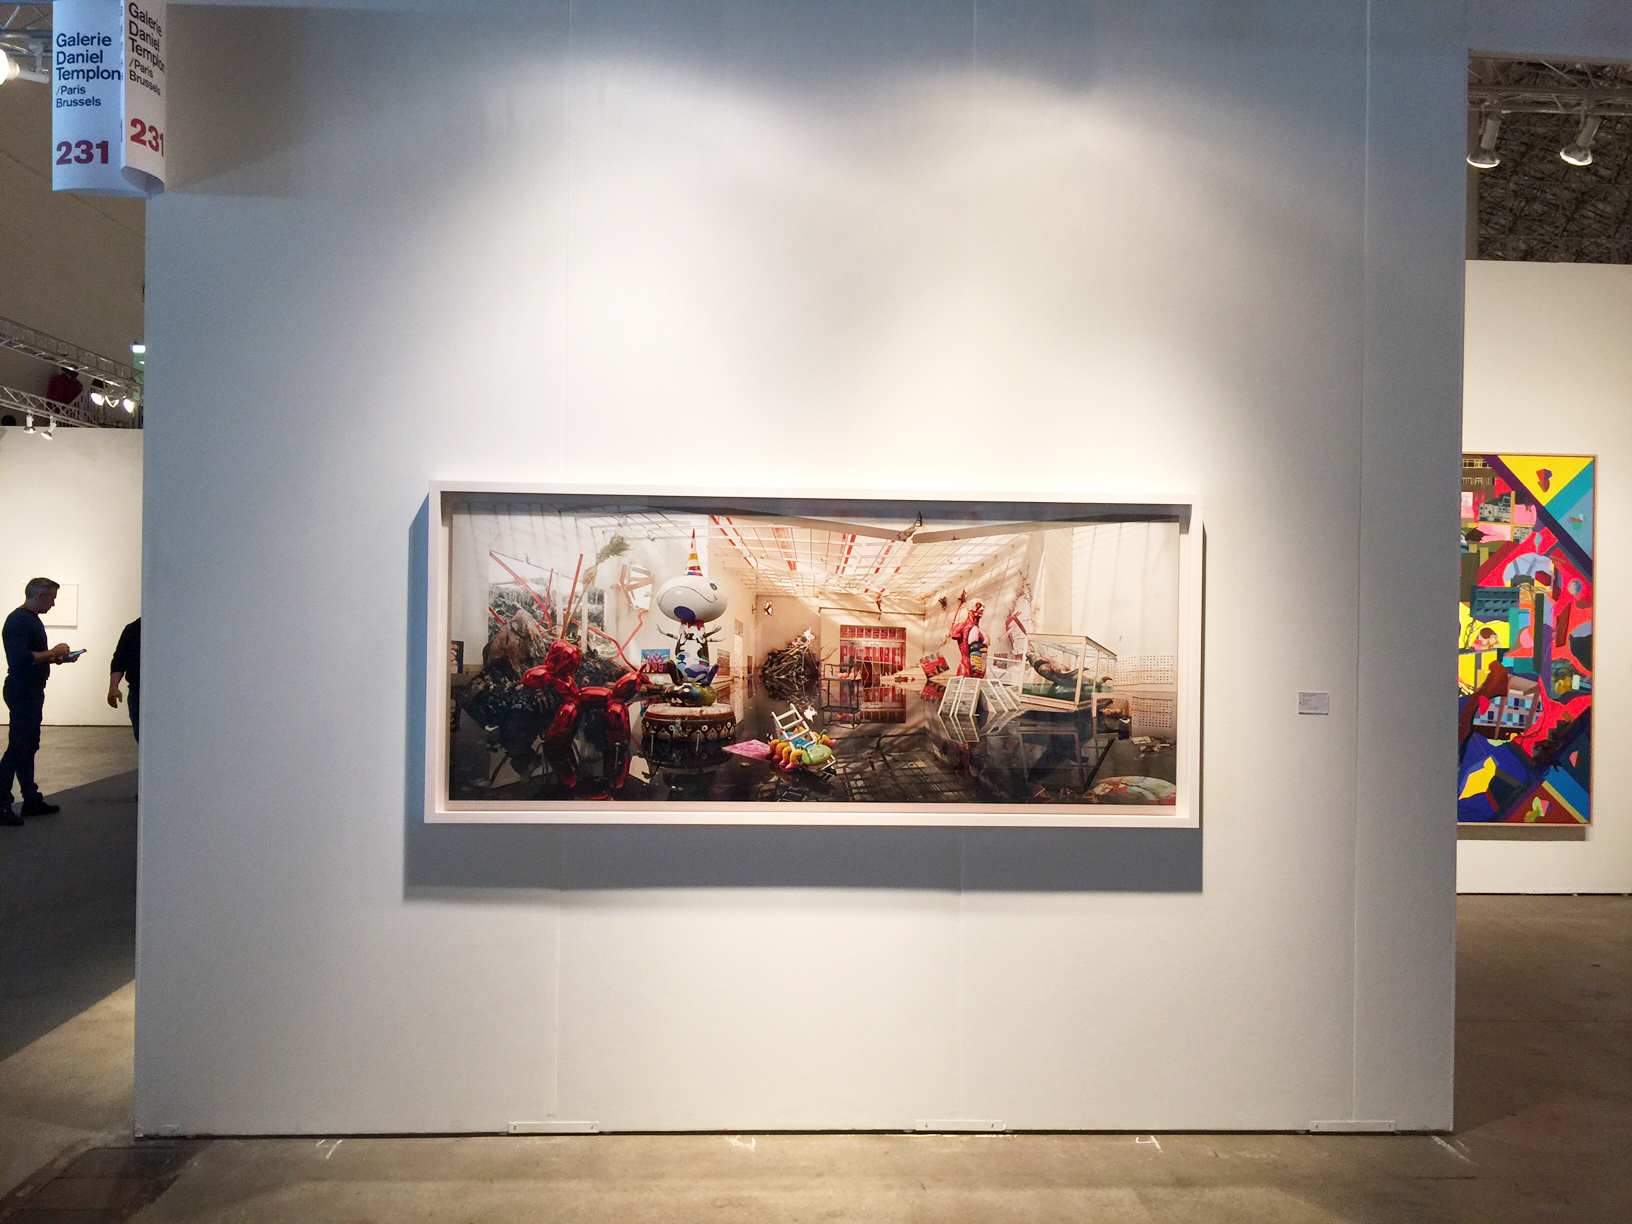 David LaChapelle | Expo Chicago, Gallery Daniel Templon, Chicago, USA, September 23 - September 25, 2016 | 2